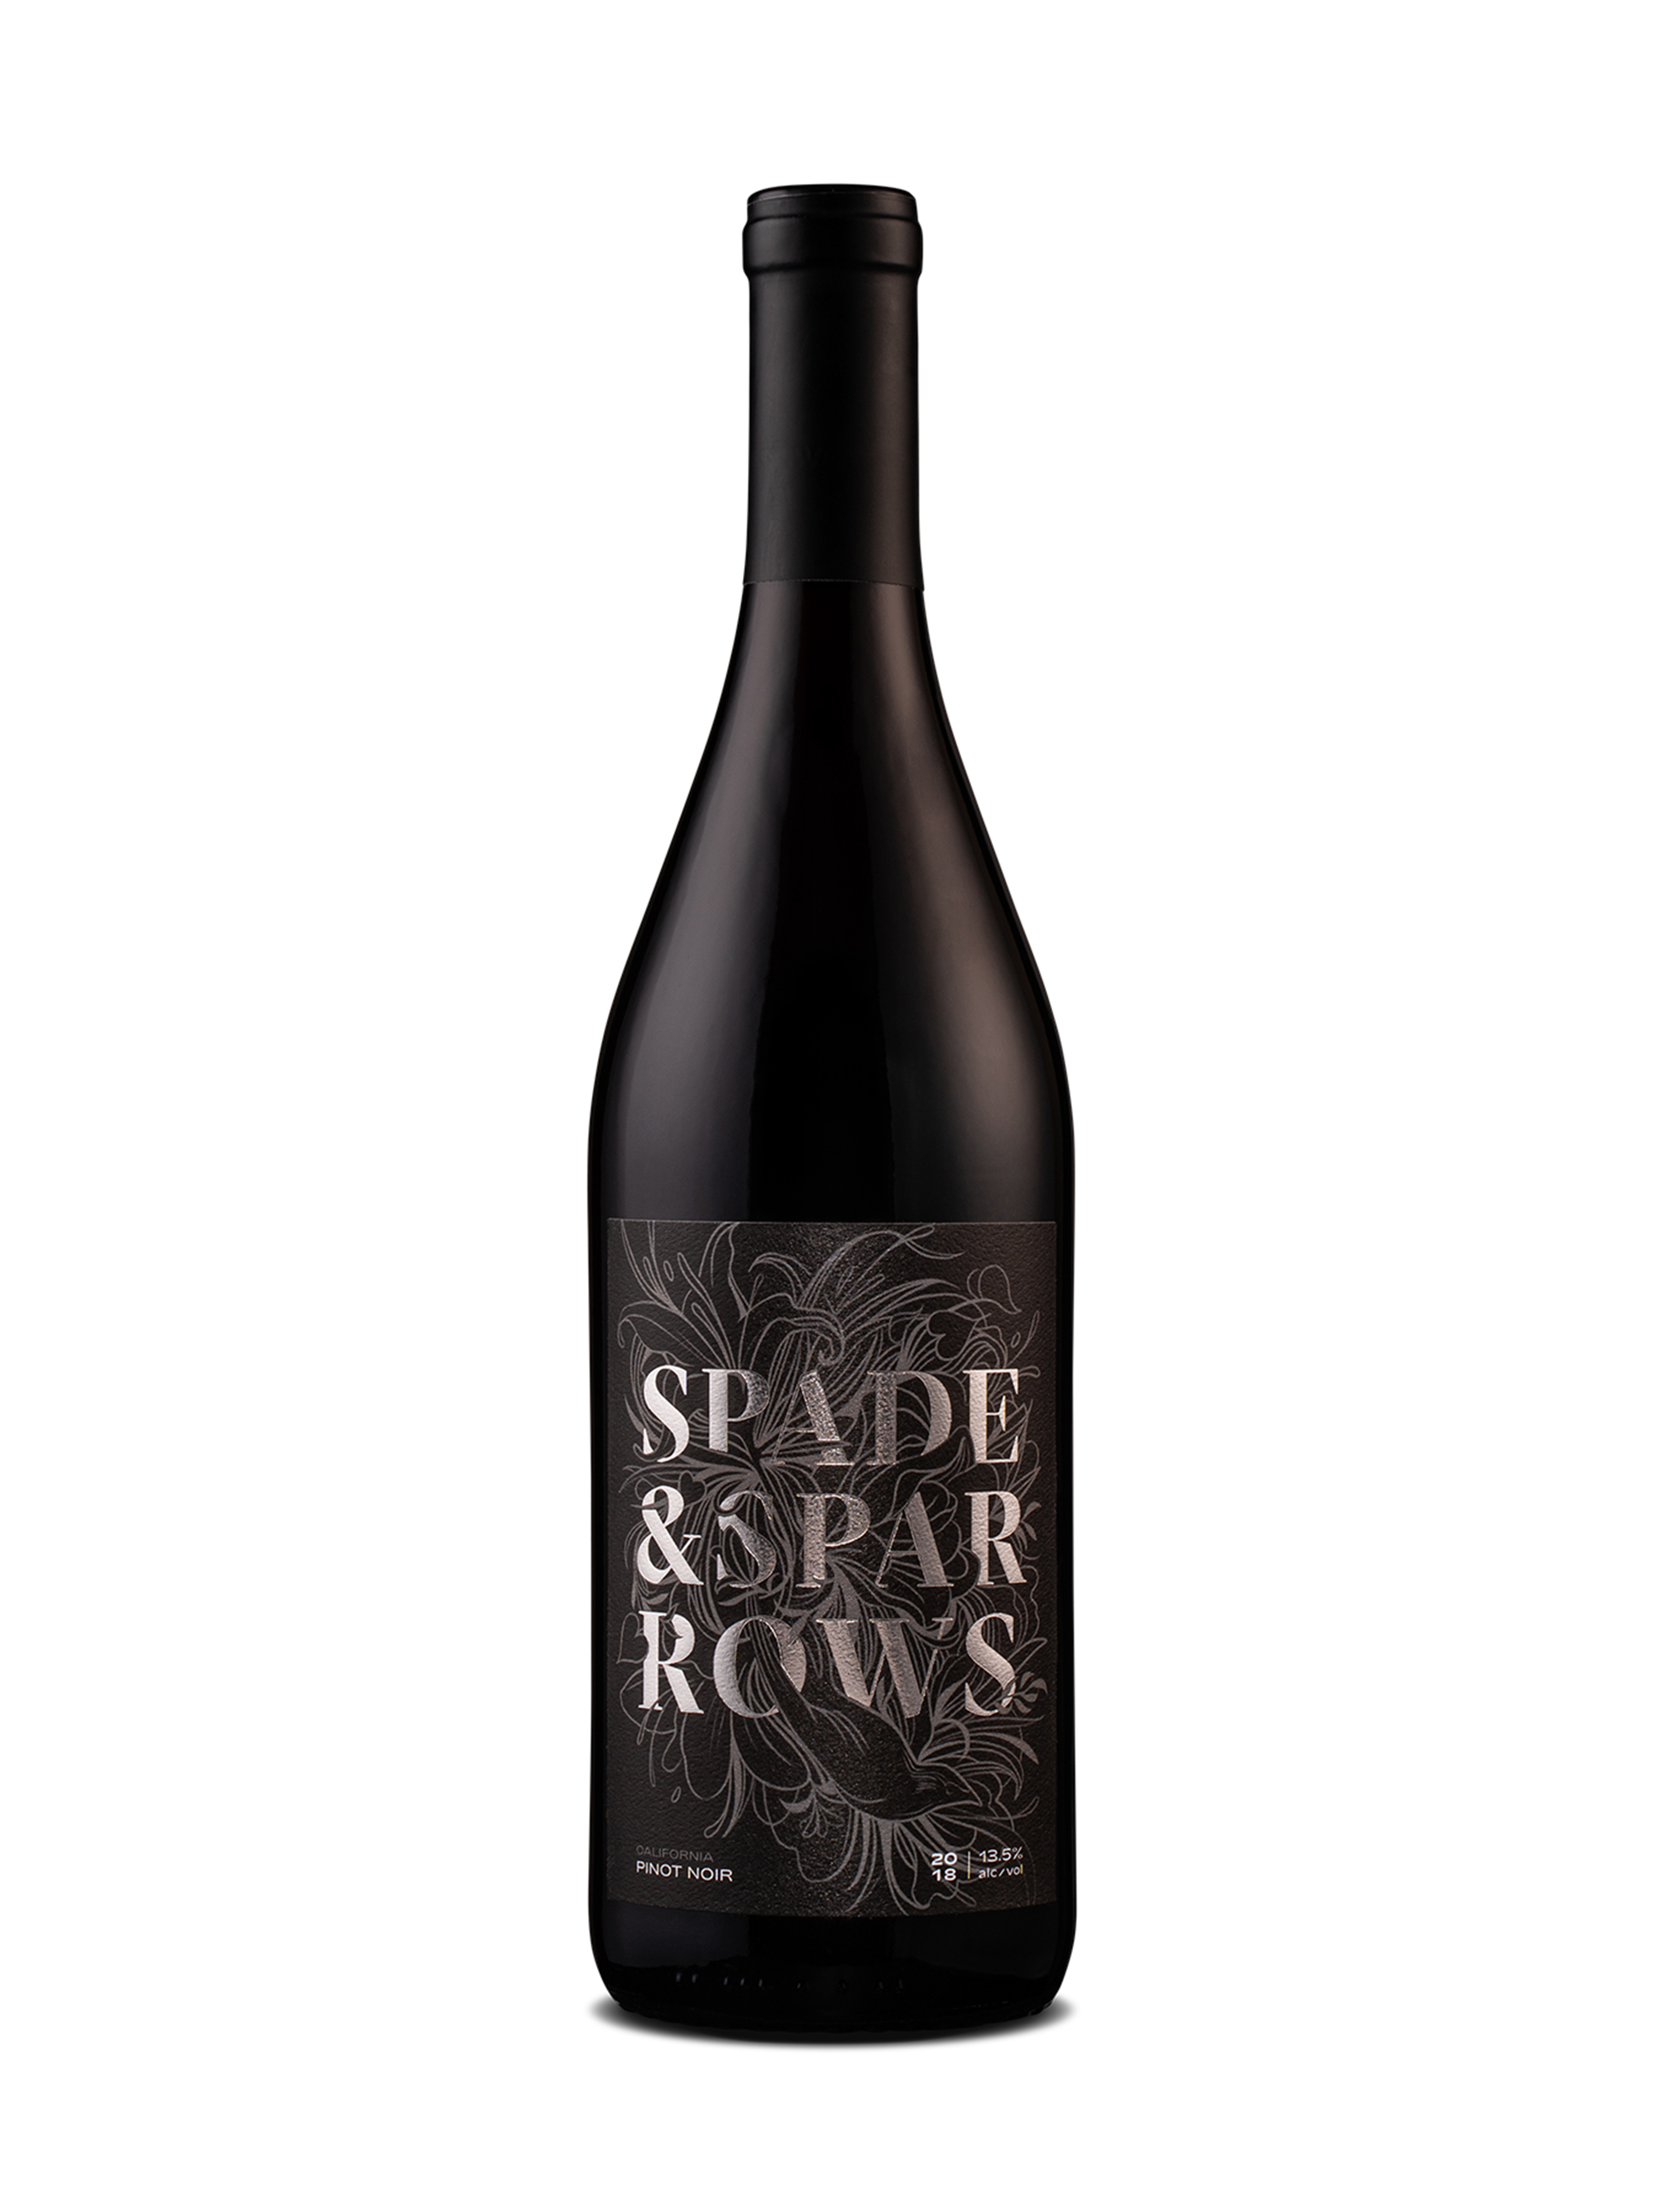 Spade & Sparrows Pinot Noir - View Image 1